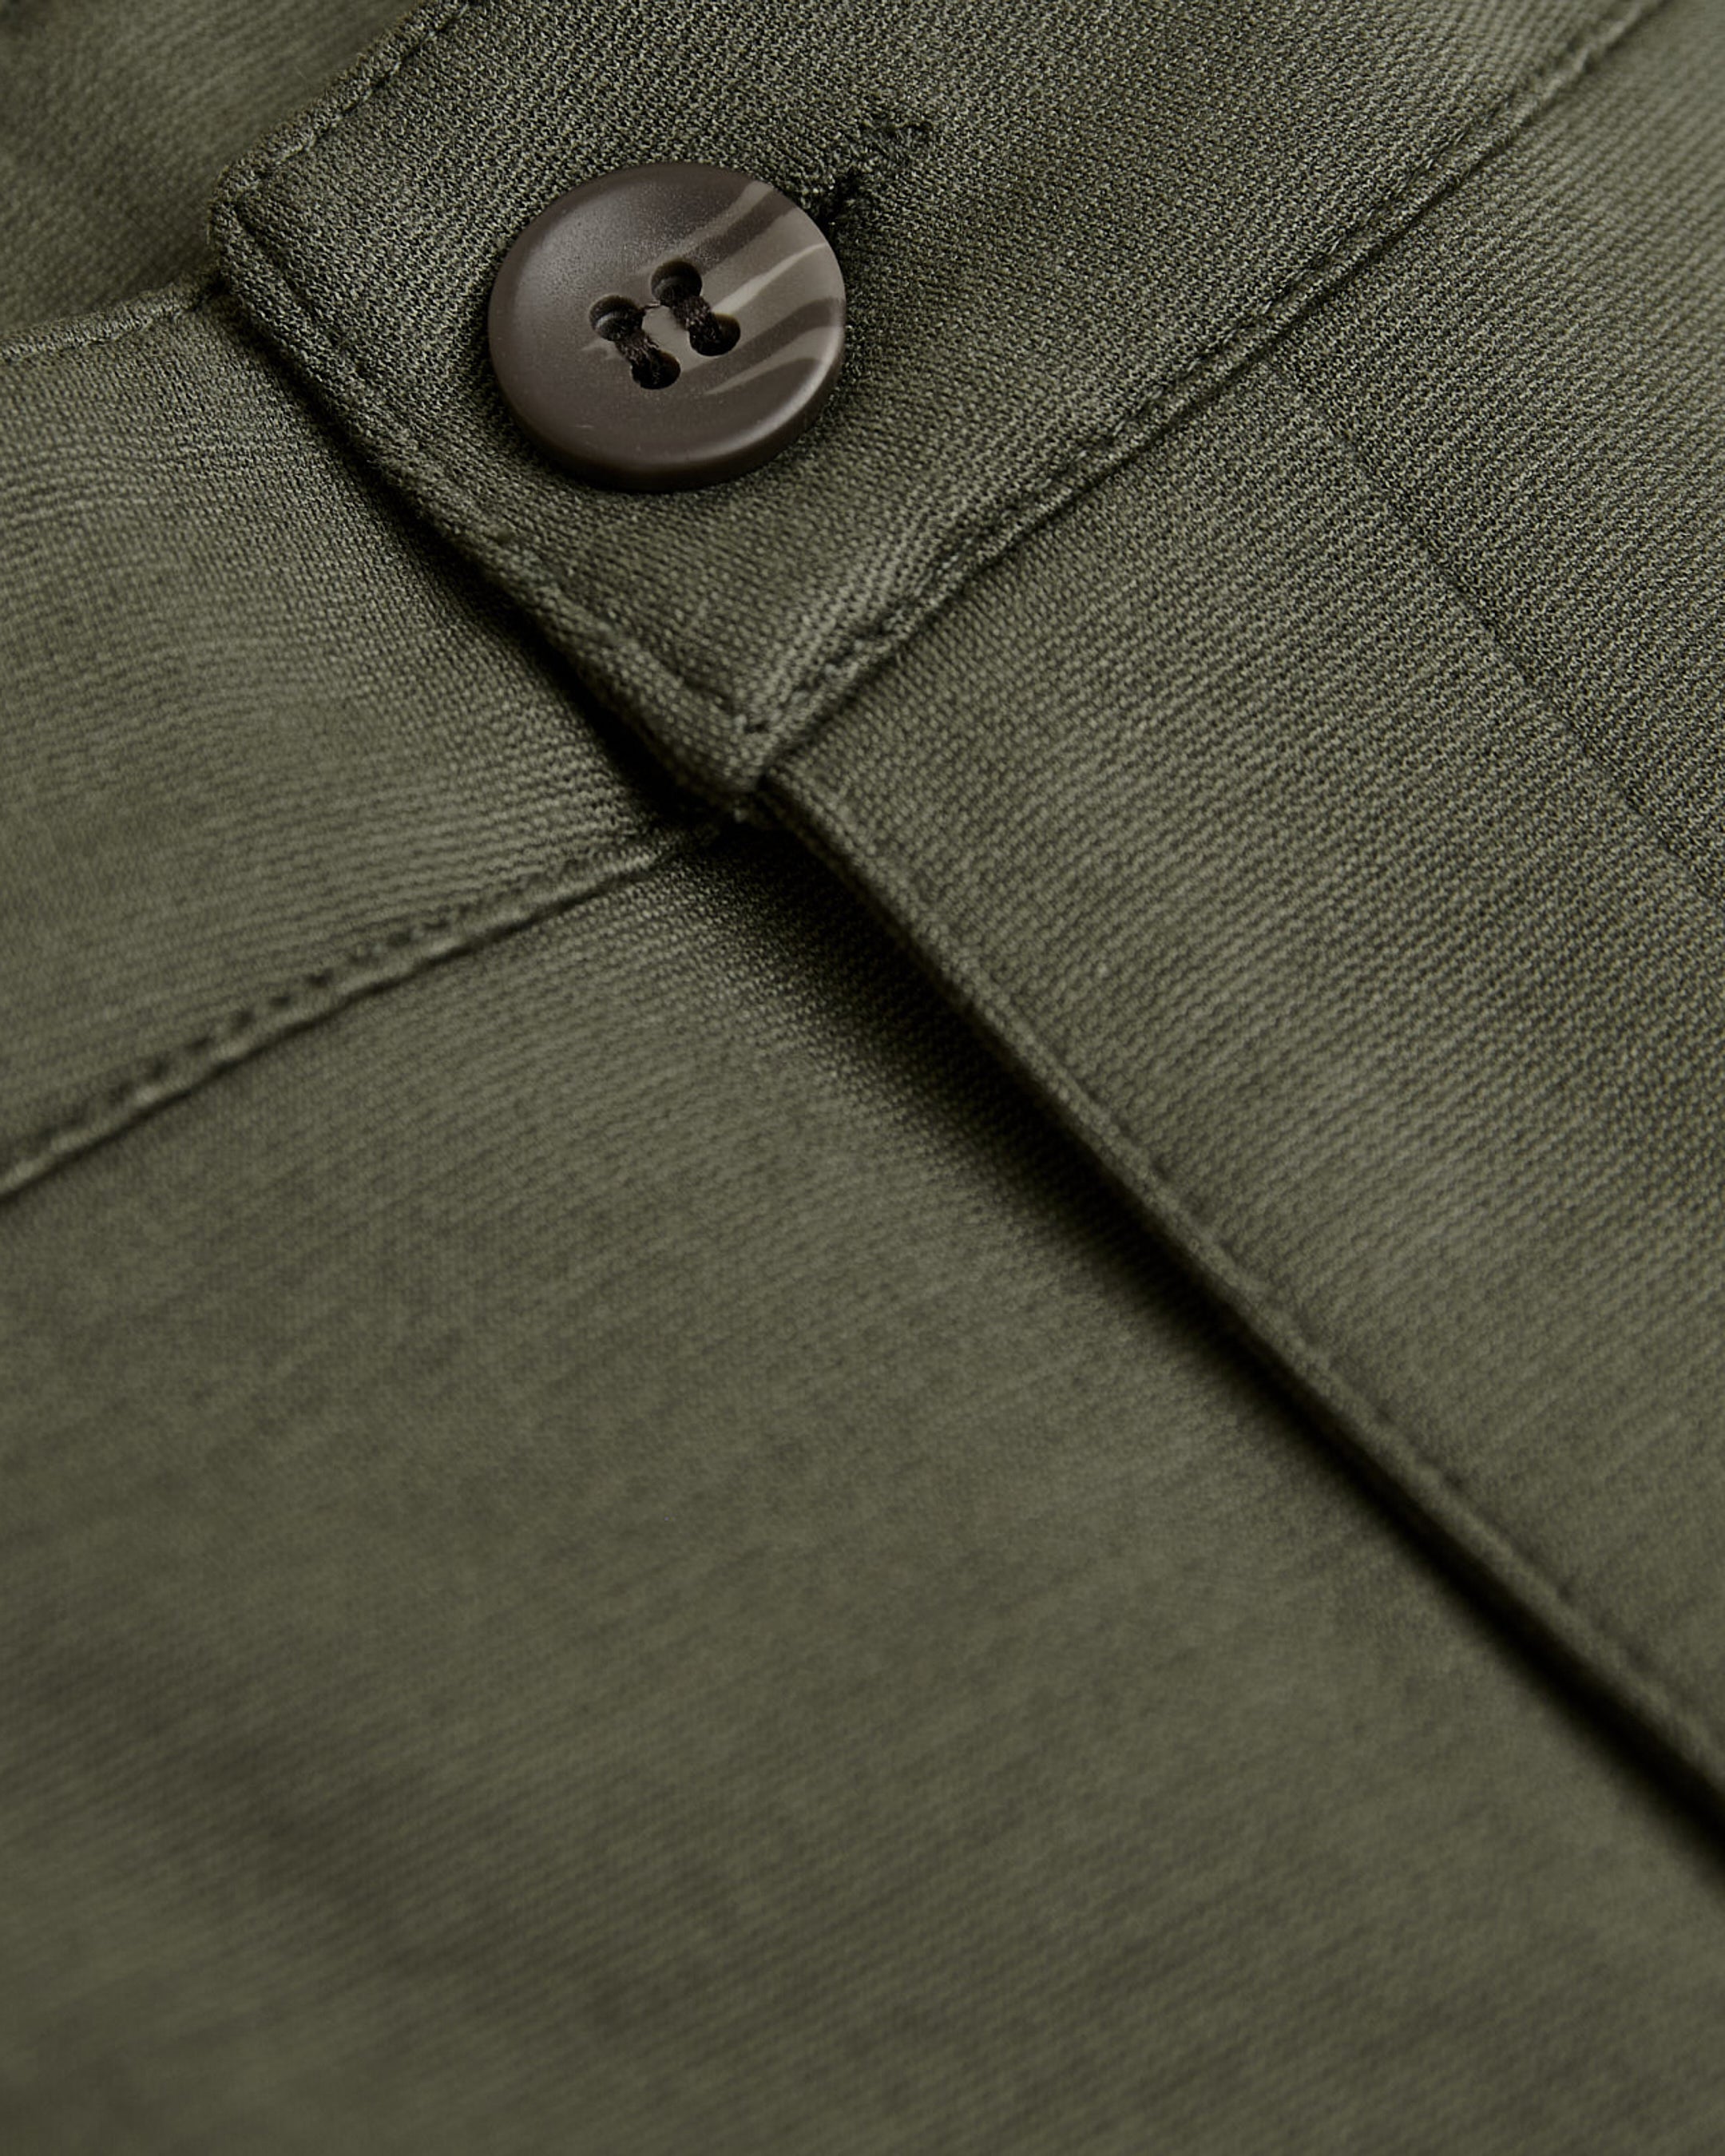 7" Military Green Comfort Knit Chino Short